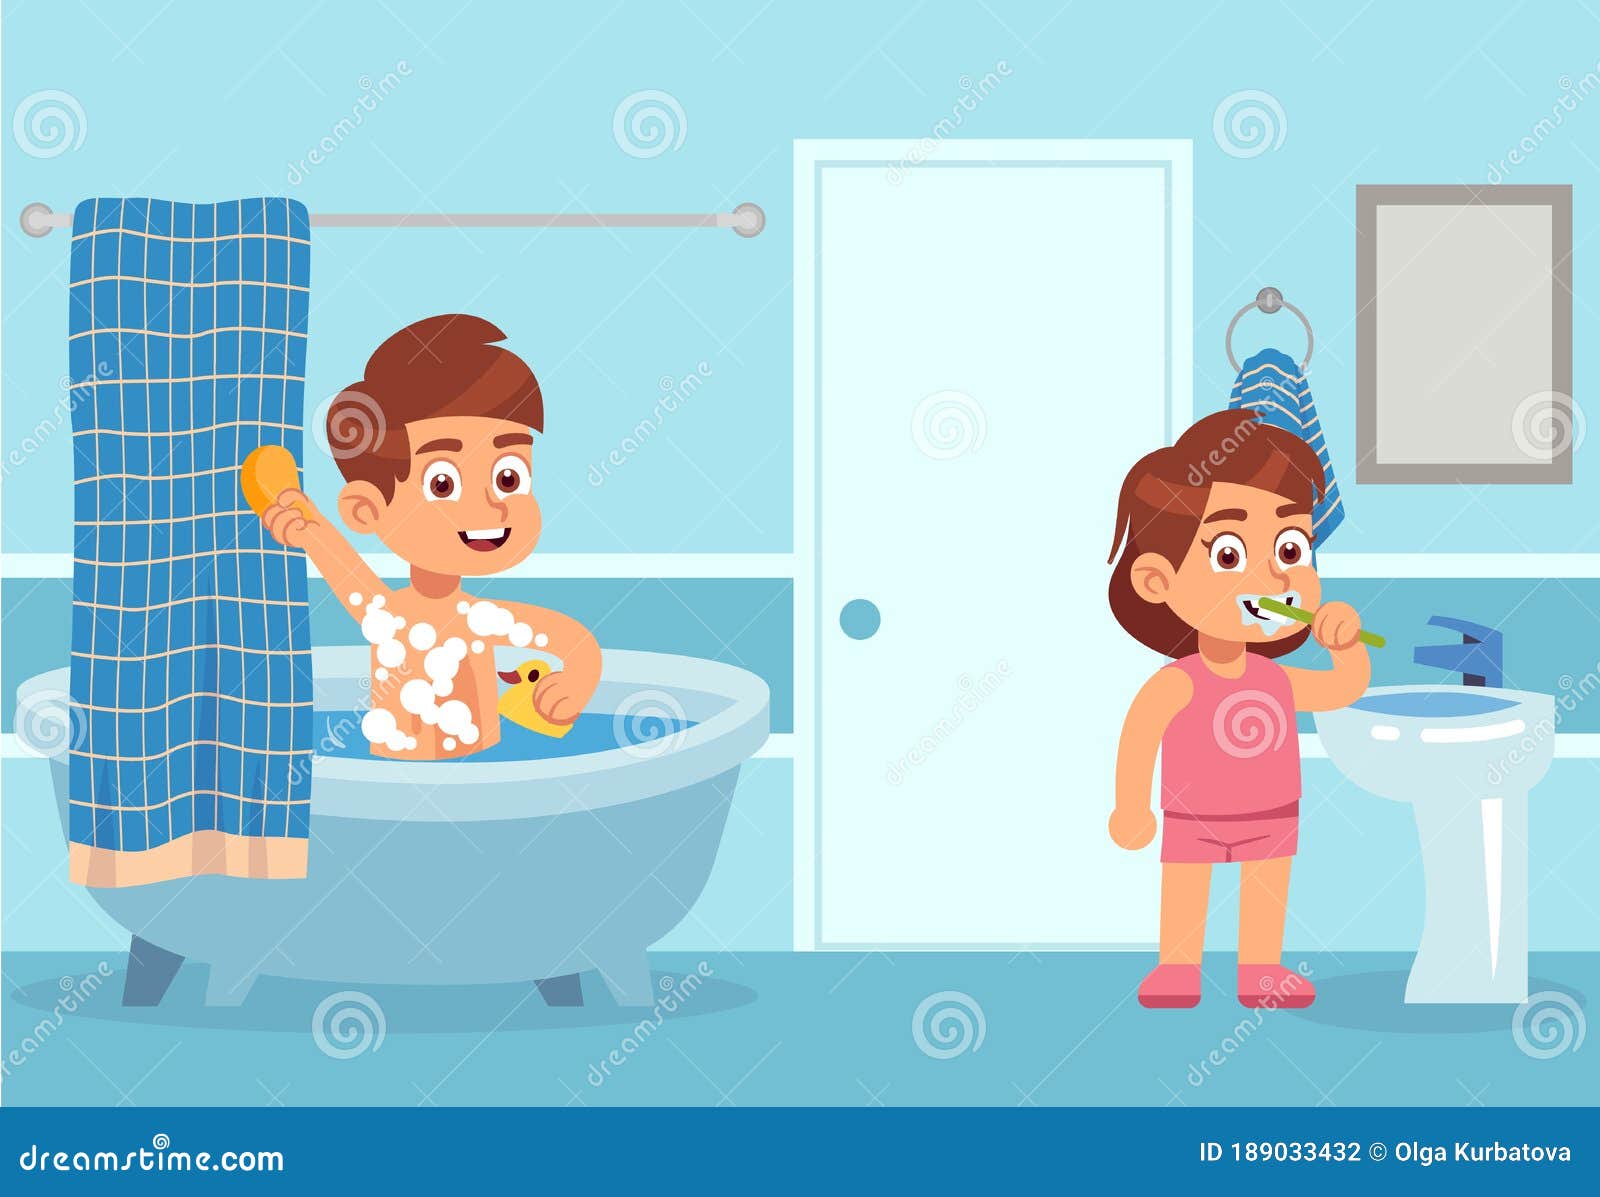 Cartoon Kid In Bath With Bubbles | CartoonDealer.com #22441935